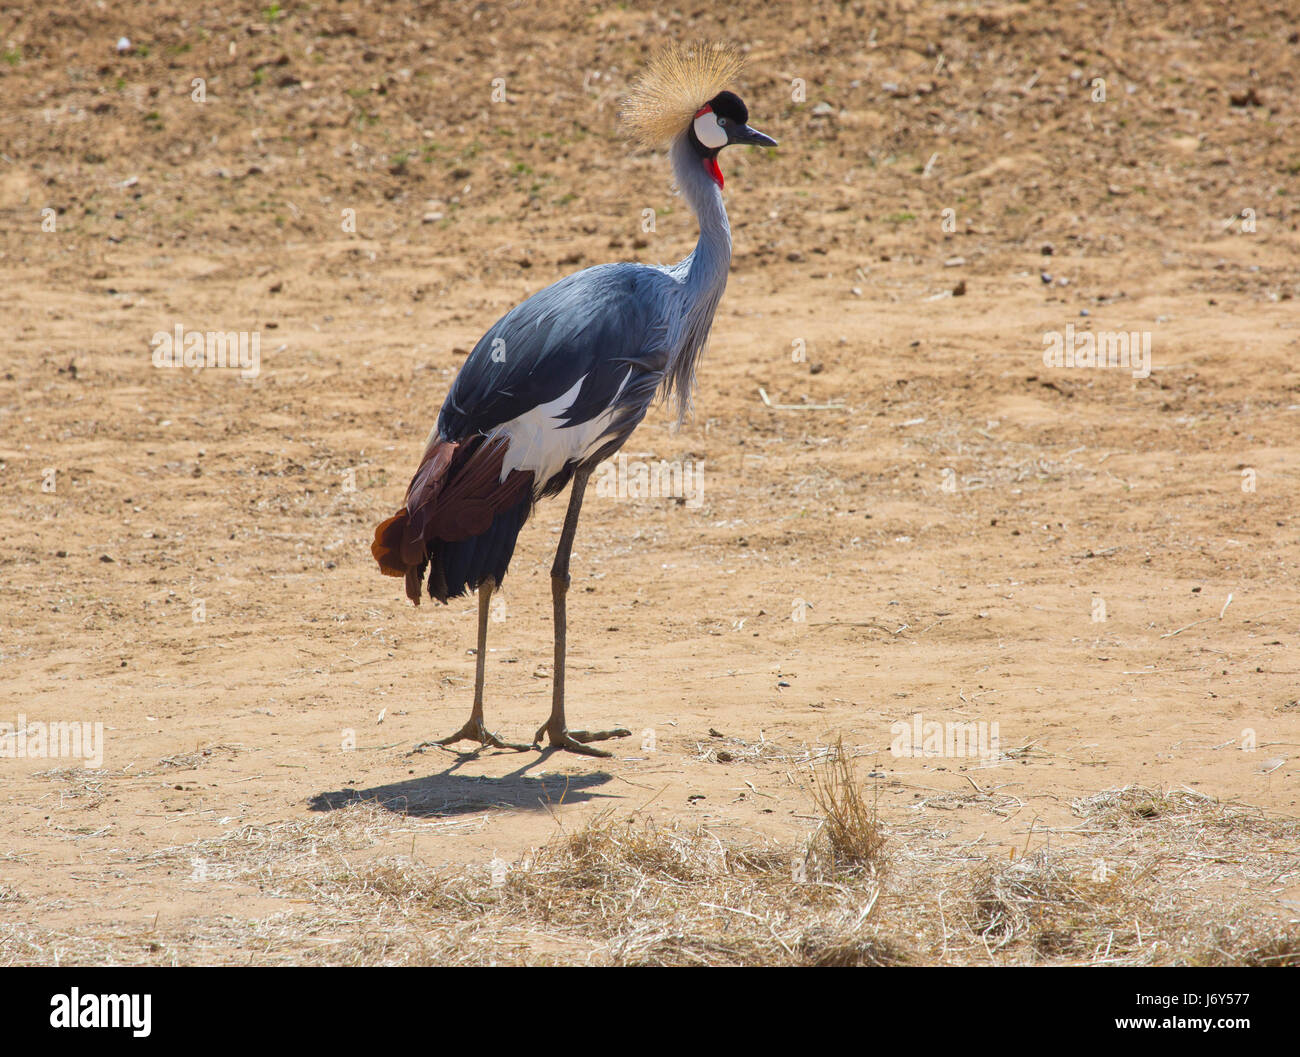 An african crowned crane in an arid desert landscape Stock Photo